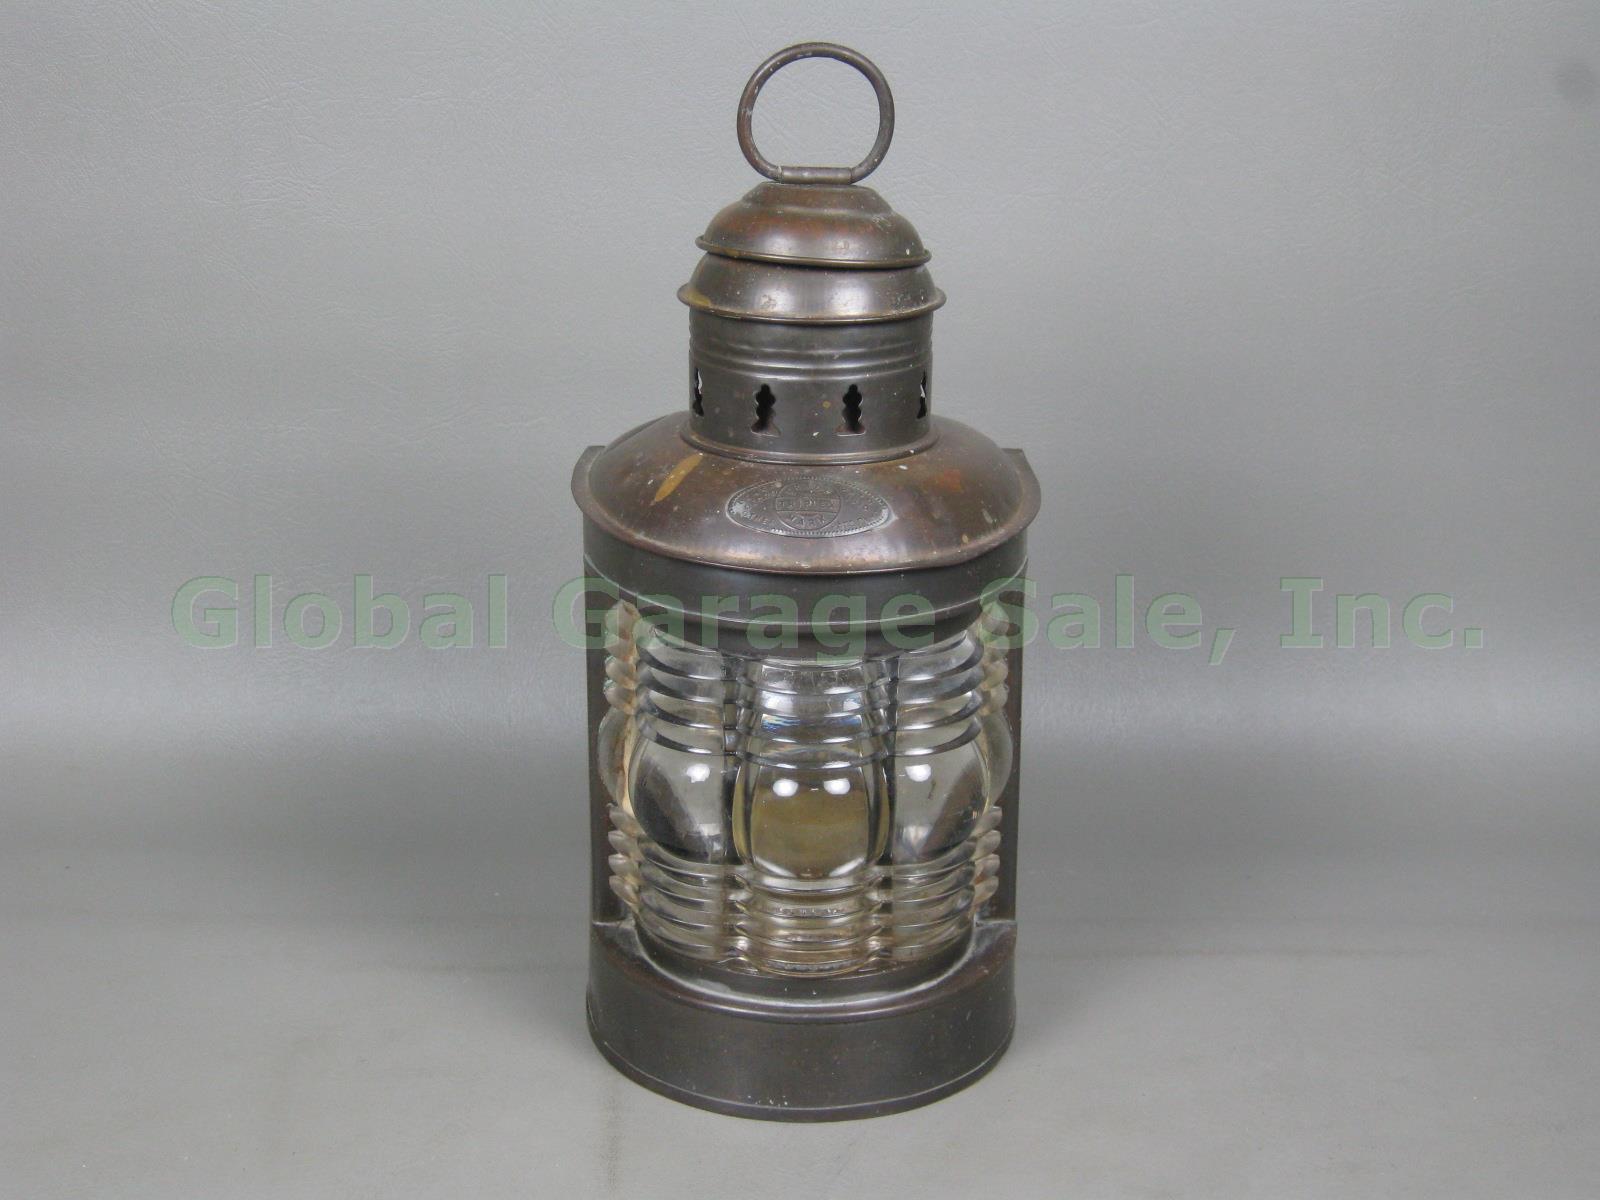 Antique Triplex Brass Maritime Ships Lantern Clear Glass Patent 1910 Electrified